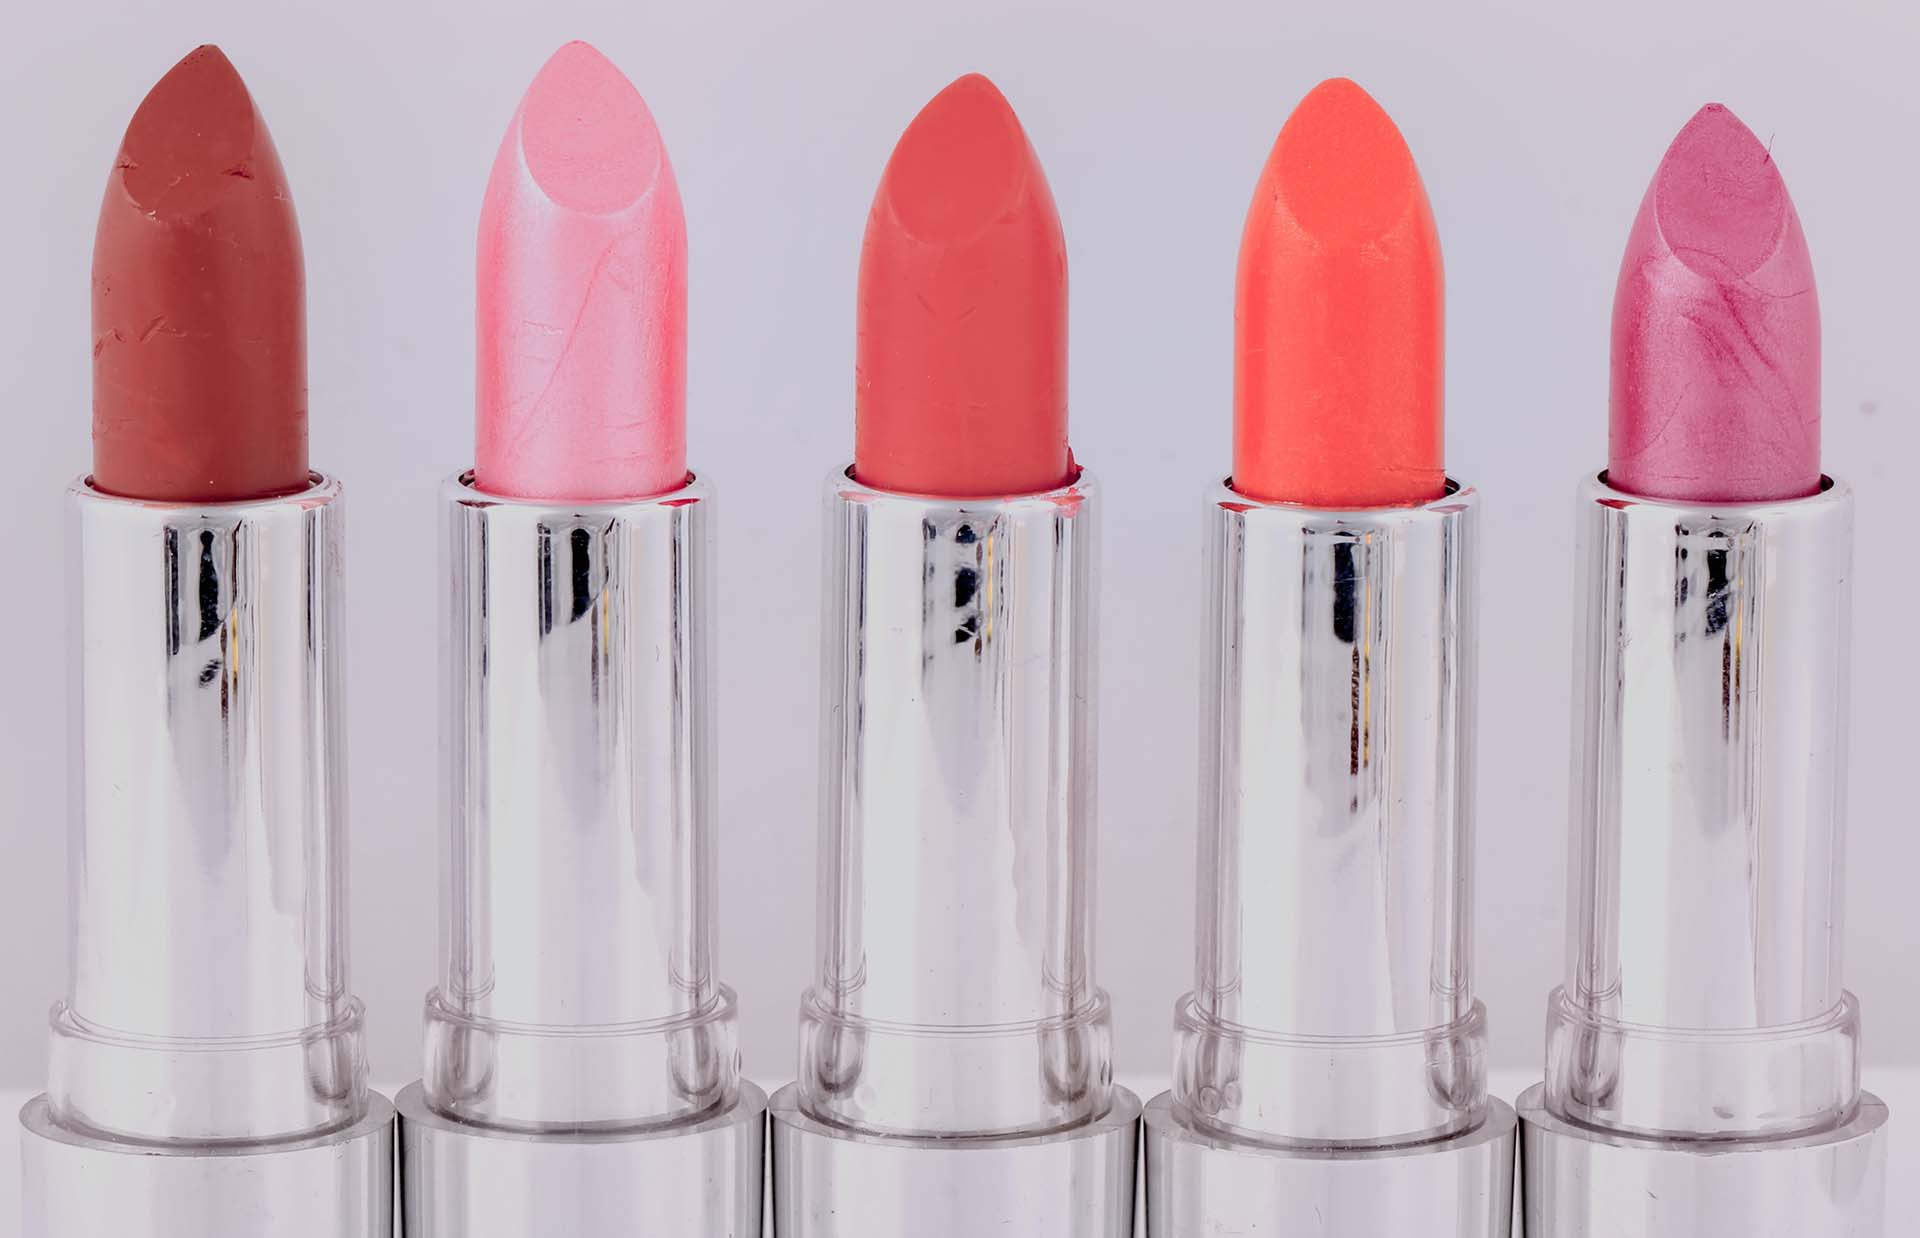 A close-up of five lipsticks